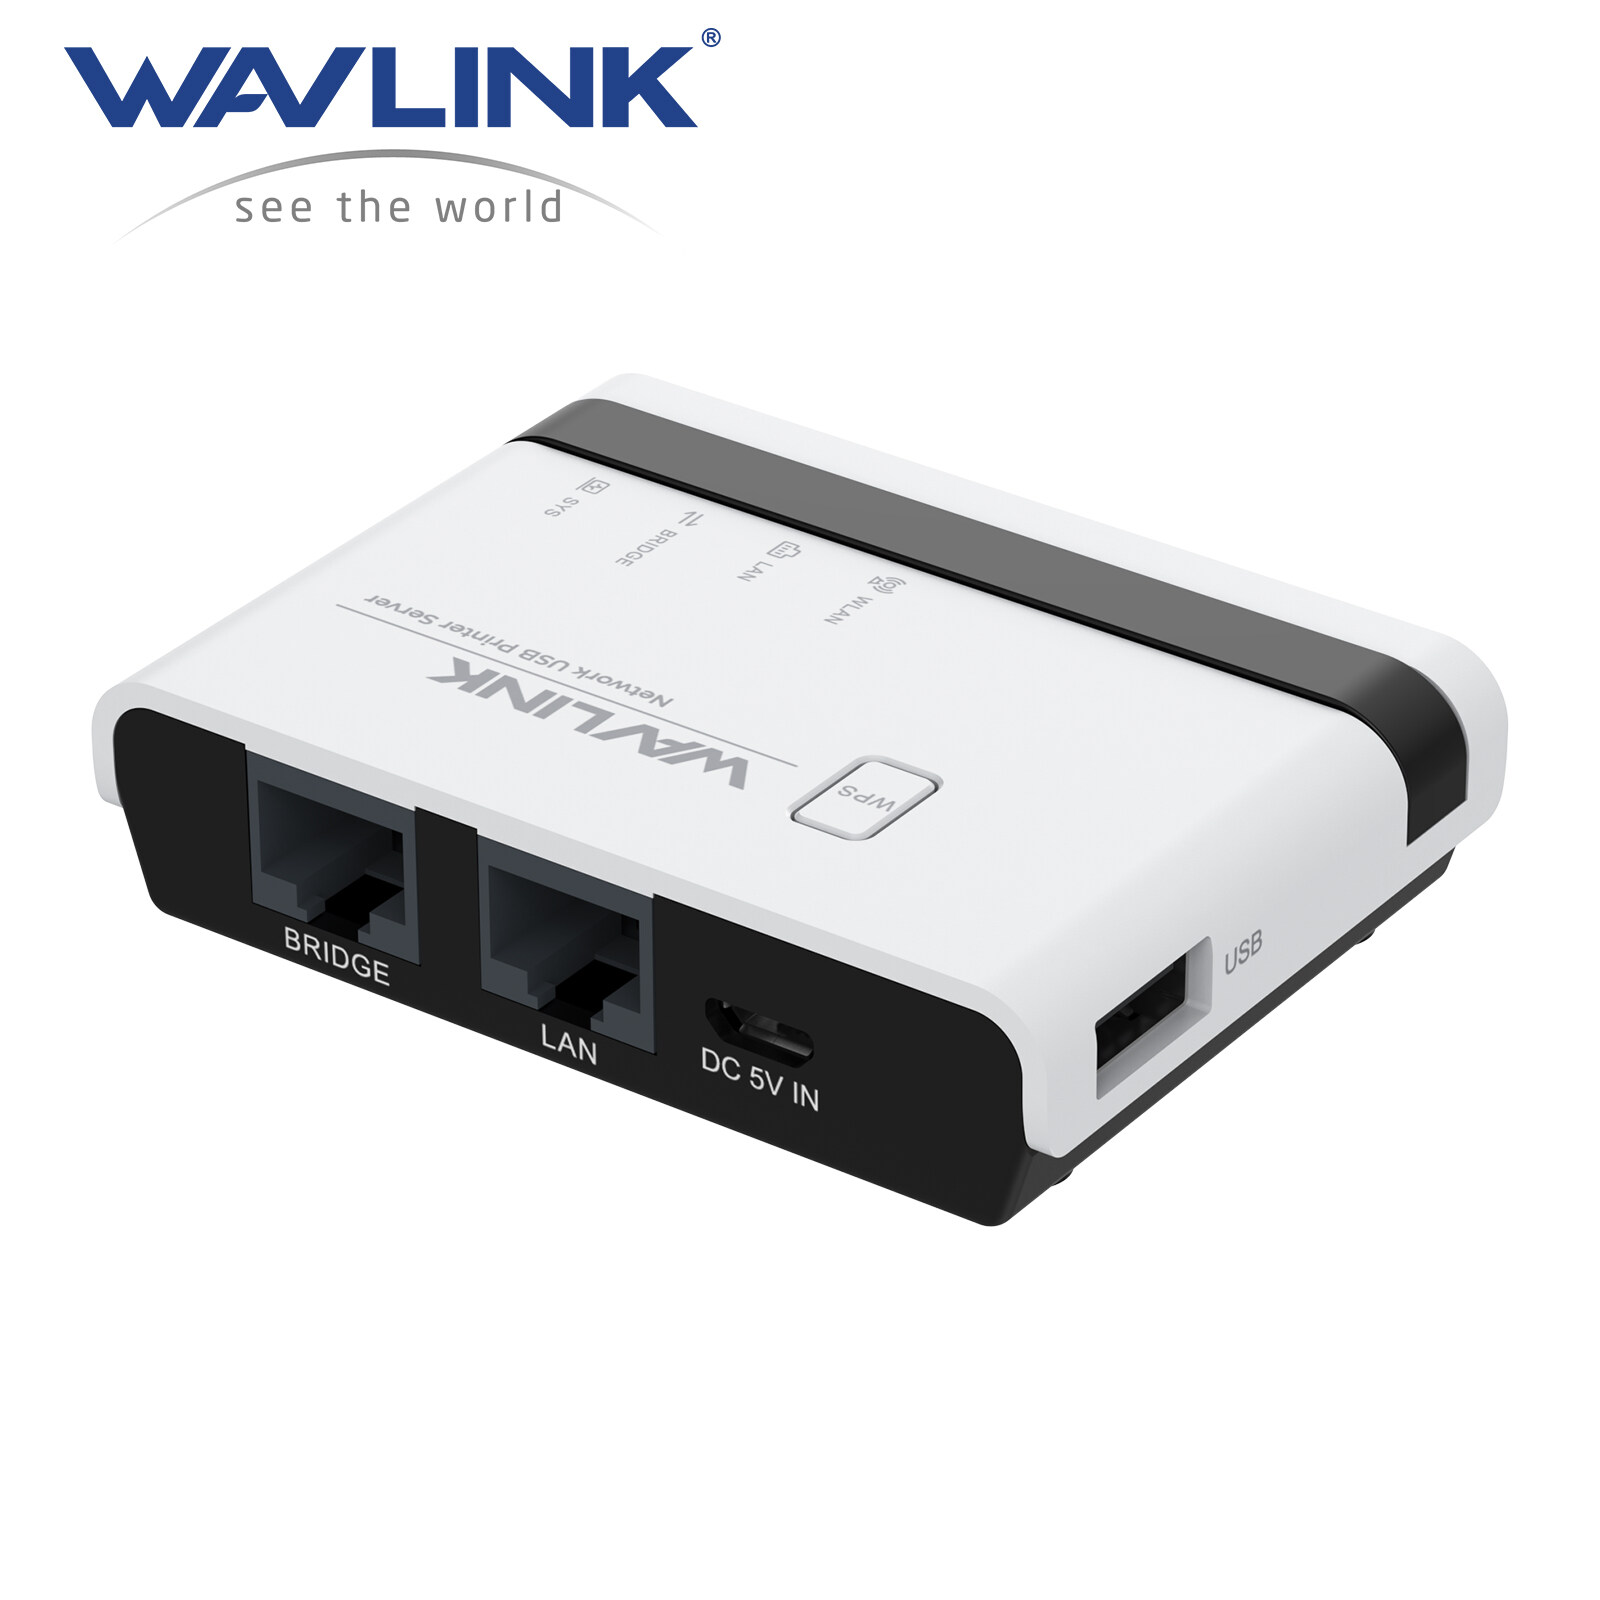 WAVLINK USB Wireless Print Server